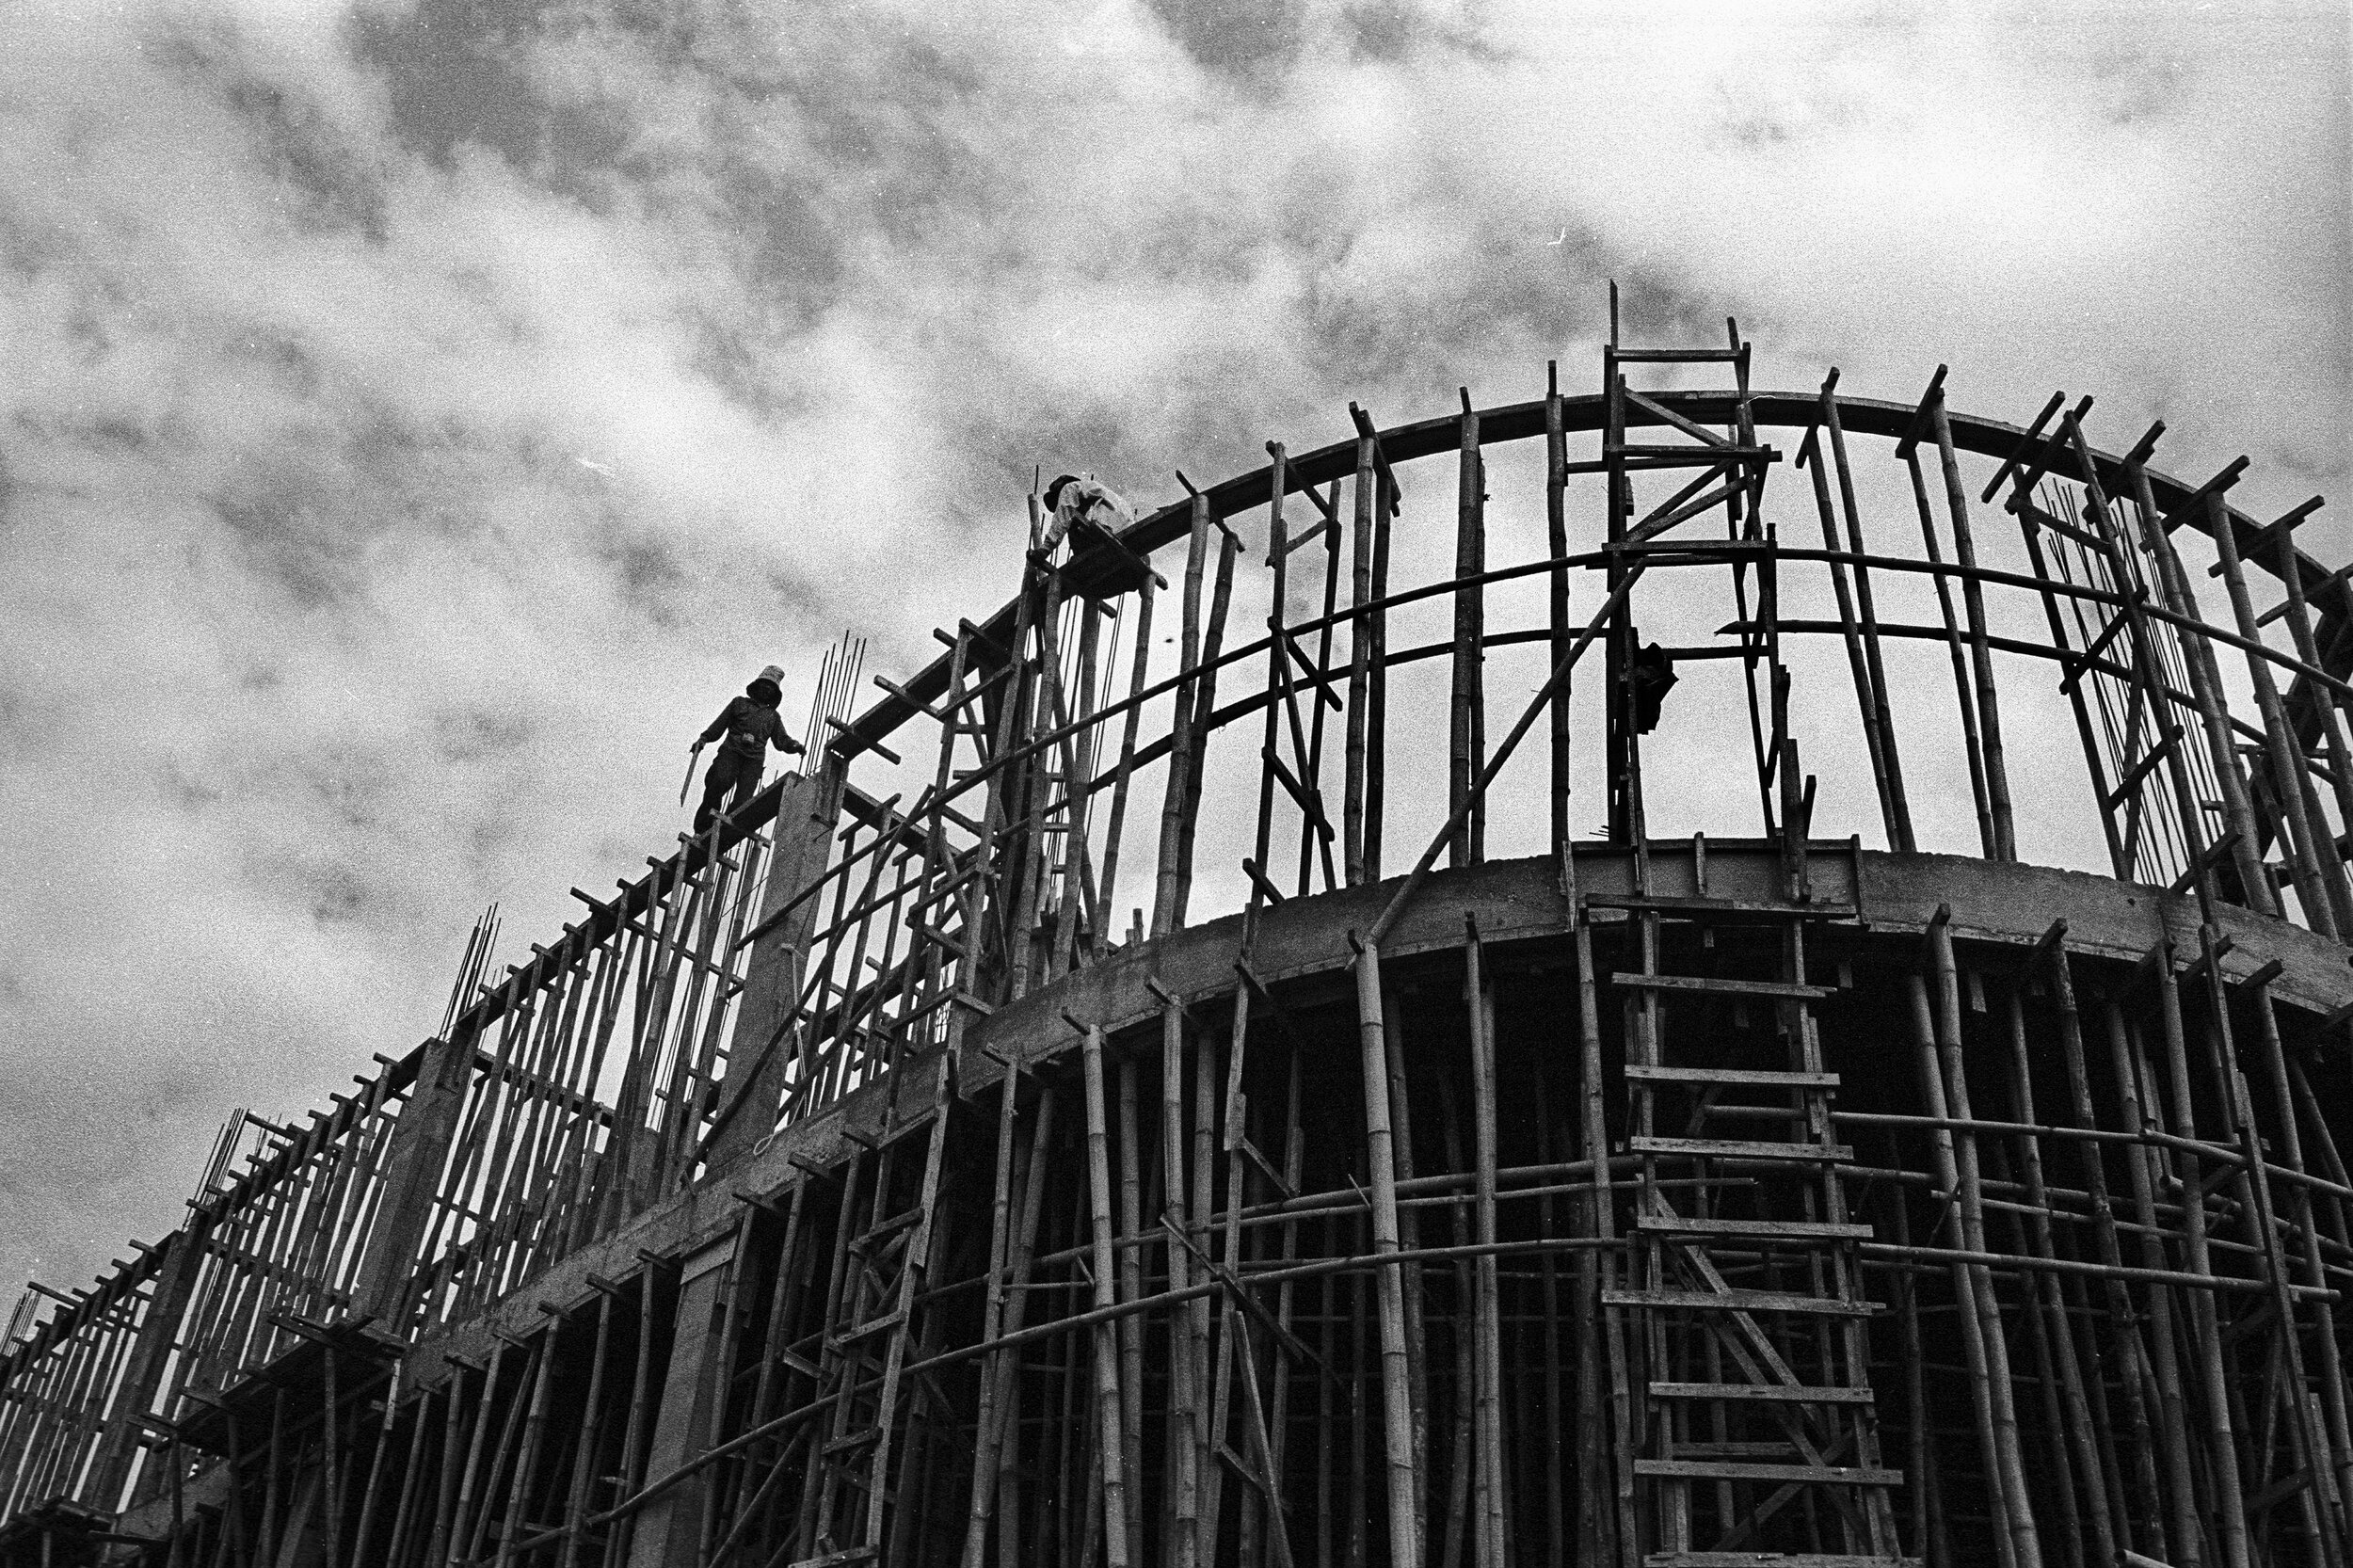  Kuta, Indonesia  Bamboo scaffolding and supports. 